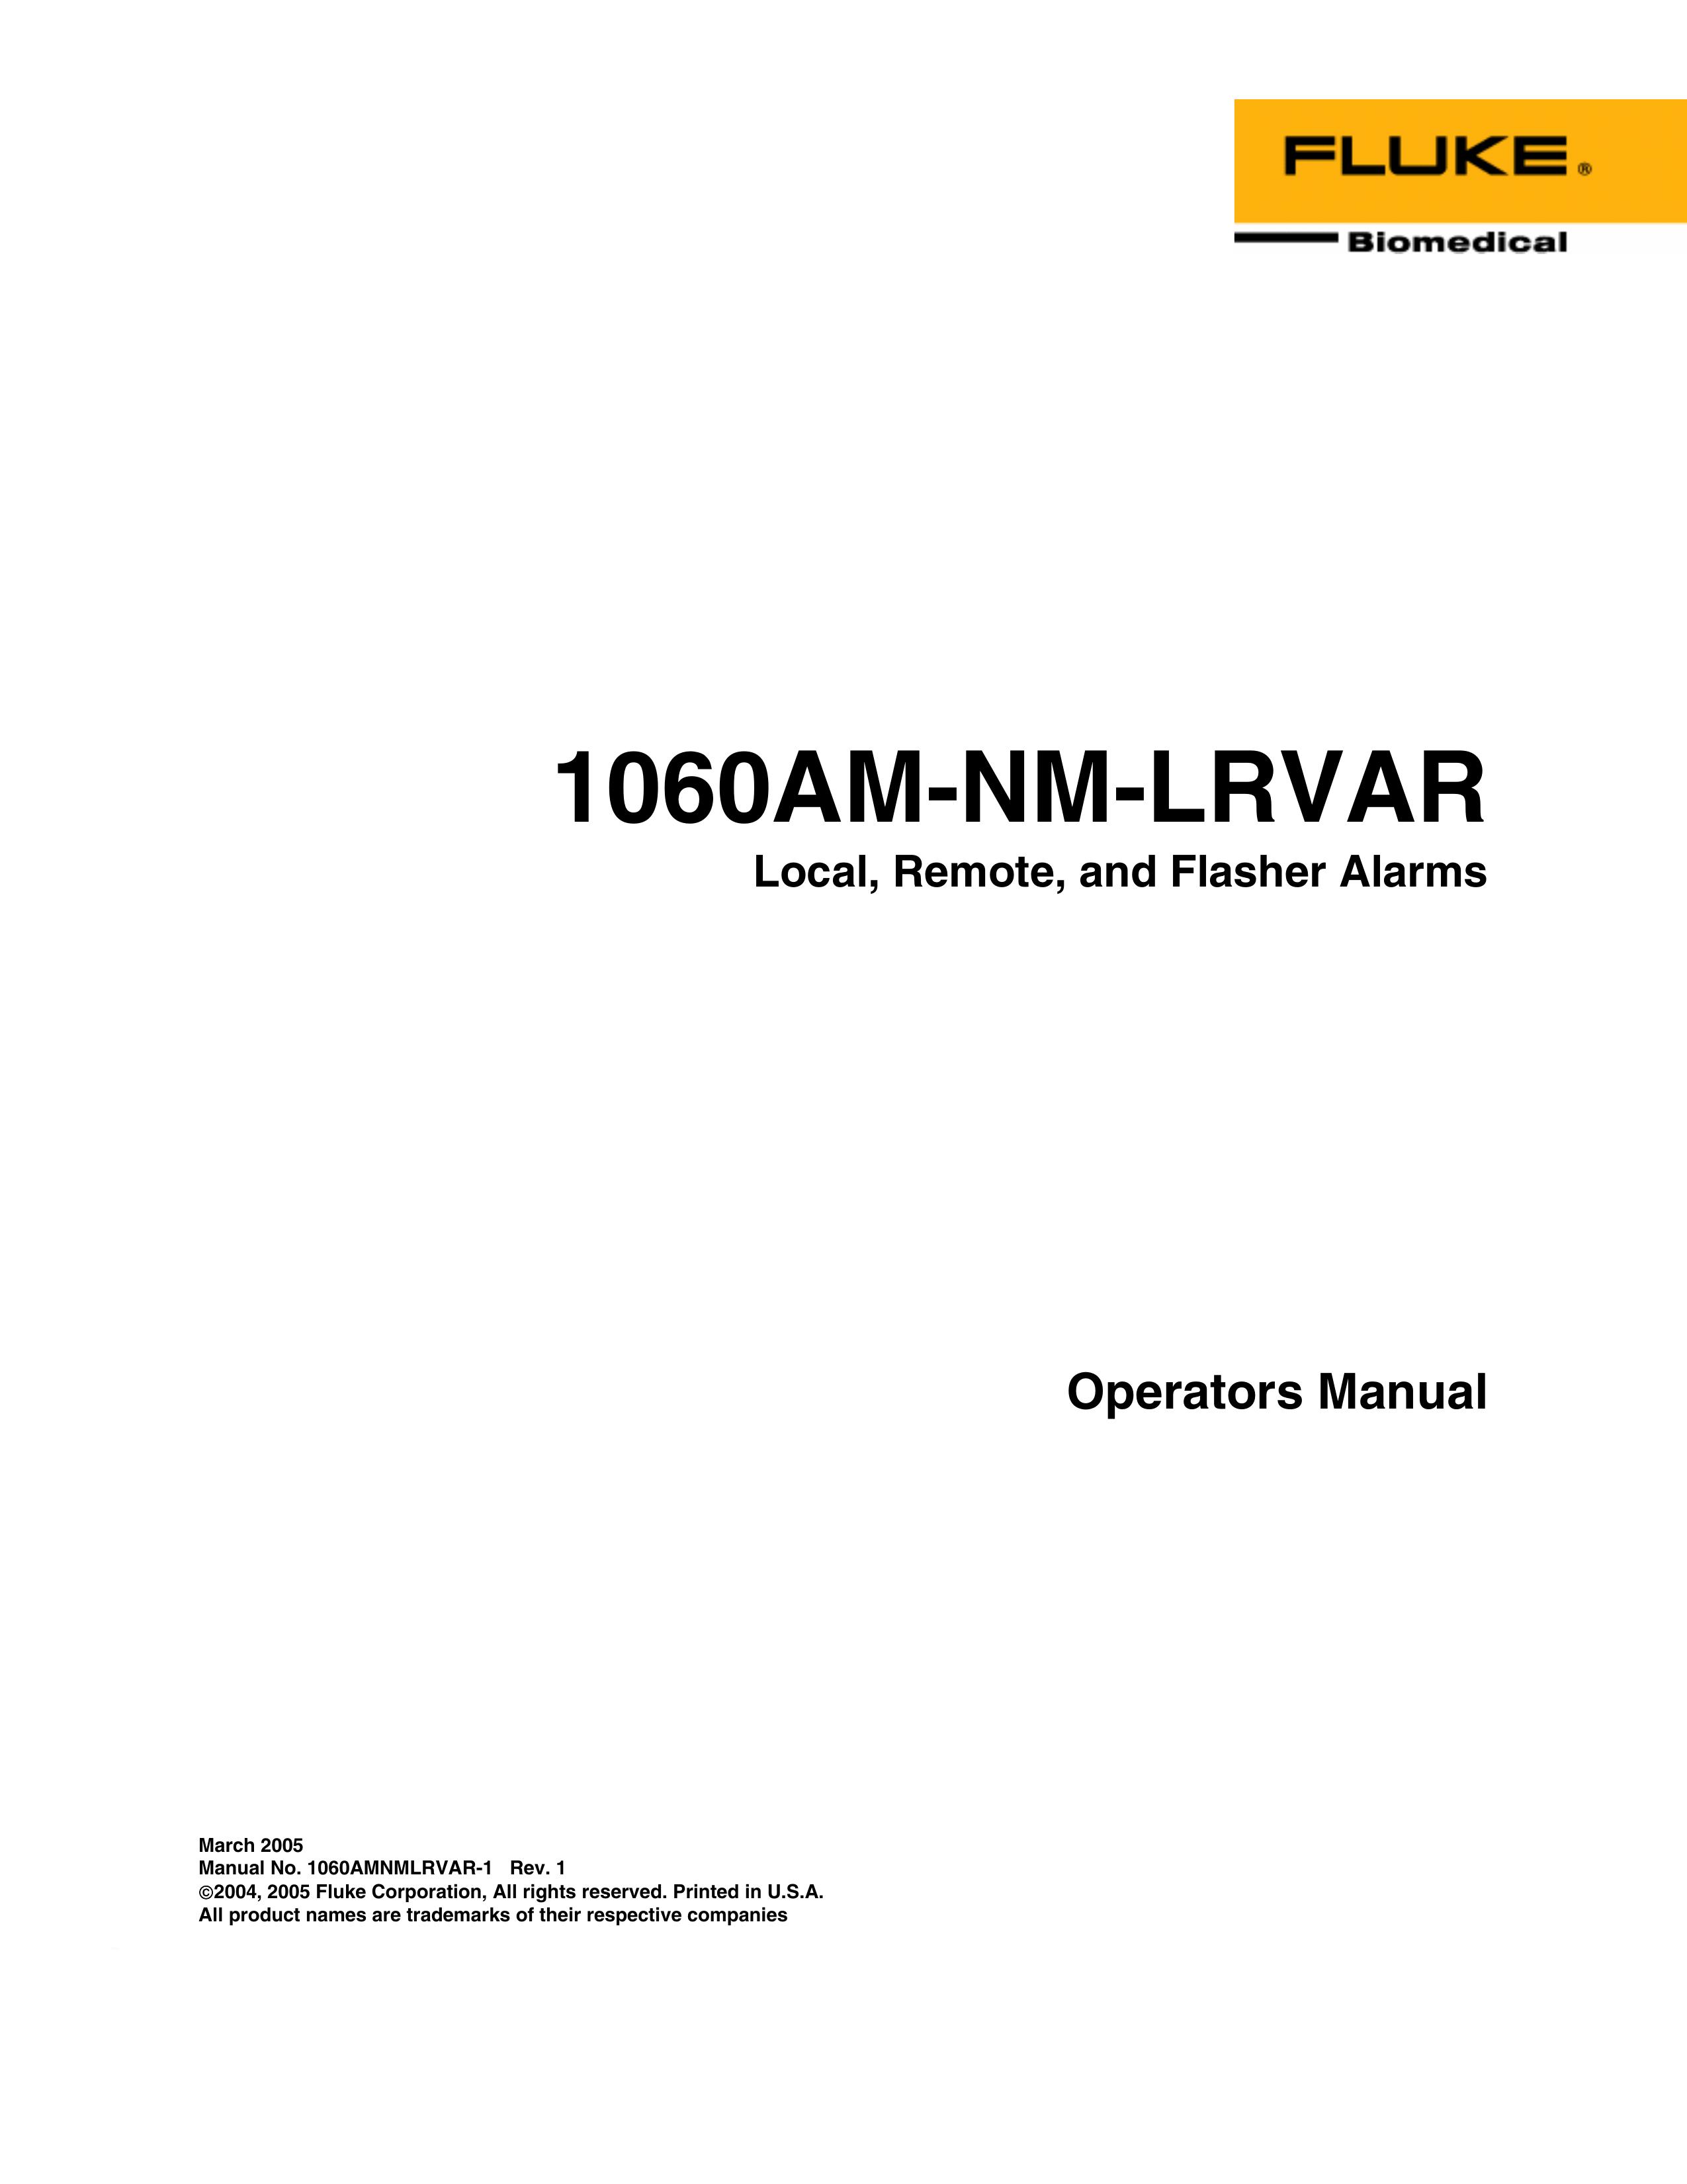 Fluke 1060AM-NM-LRVAR Medical Alarms User Manual